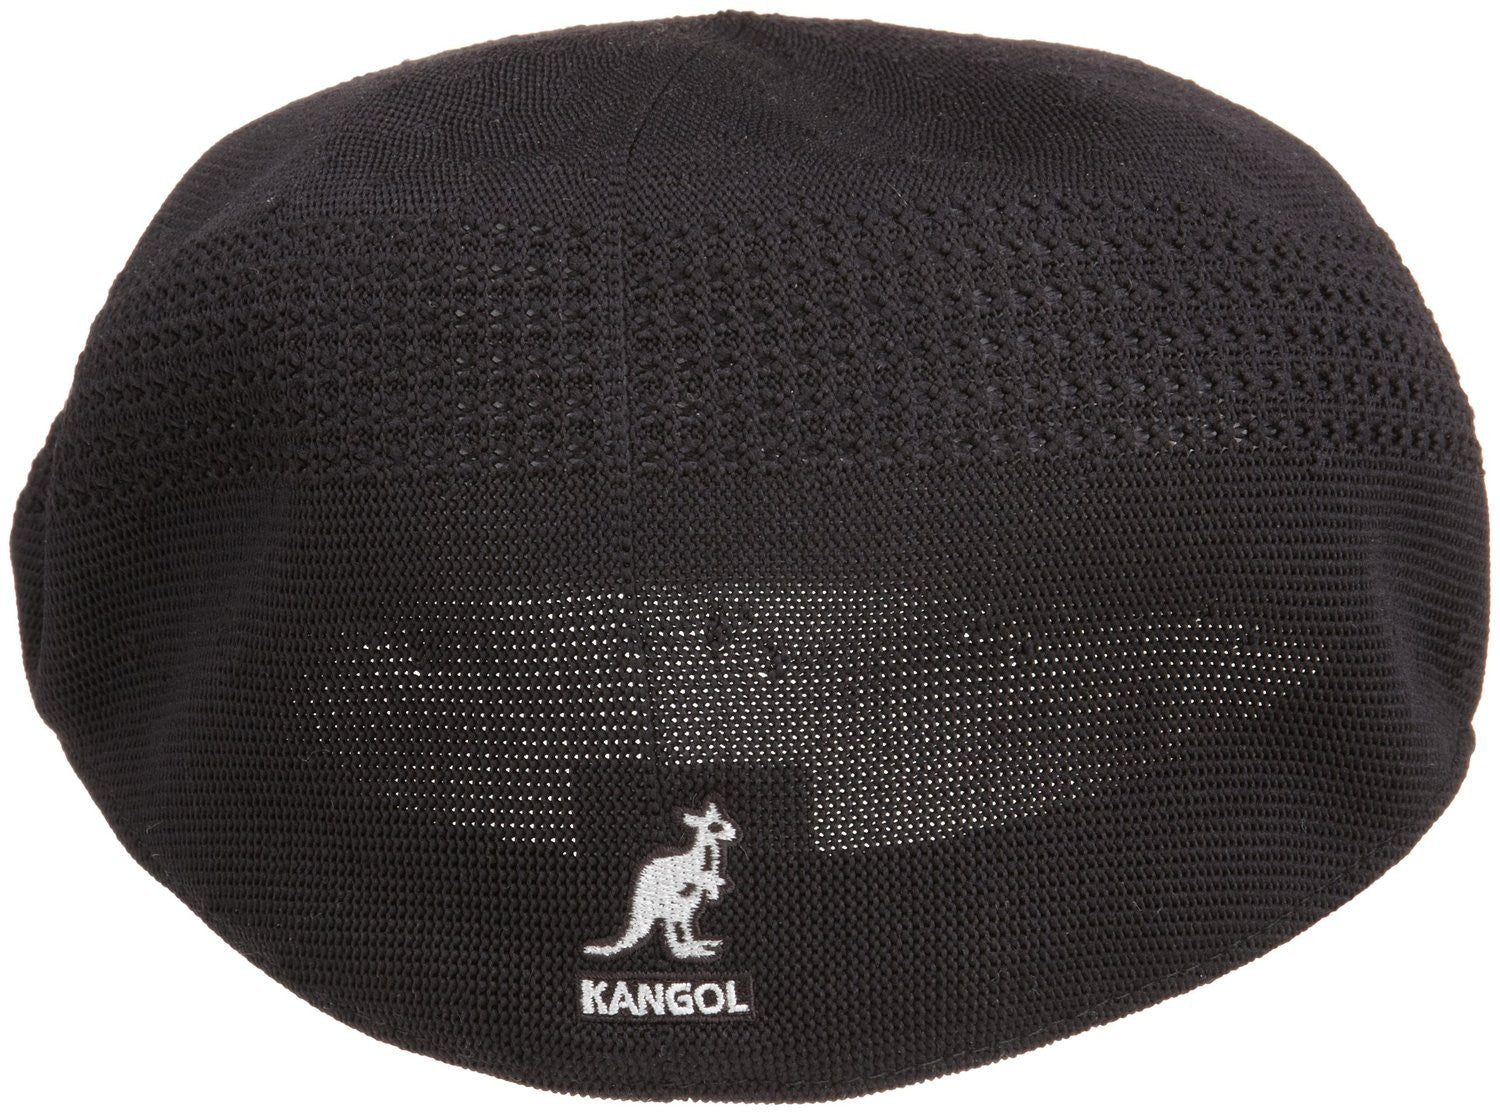 Kangol 504. Kangol Tropic Ventair 504 Black. Kangol 504 cap Original. Кепка Kangol 504. Кепка Kangol 504 Tropic.